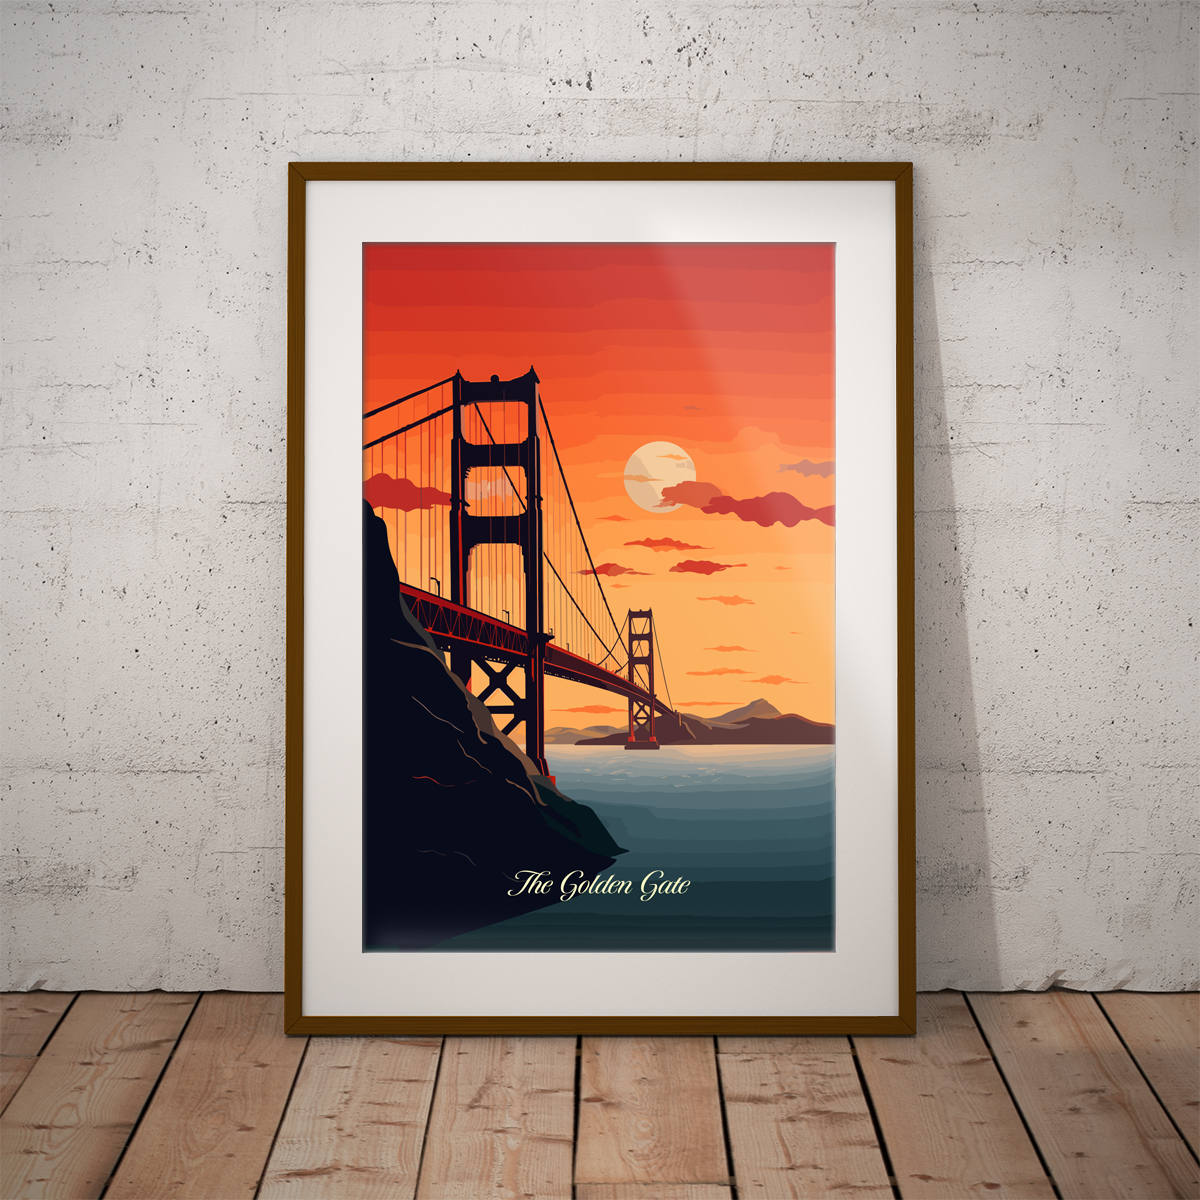 San Francisco - Golden Gate poster by bon voyage design